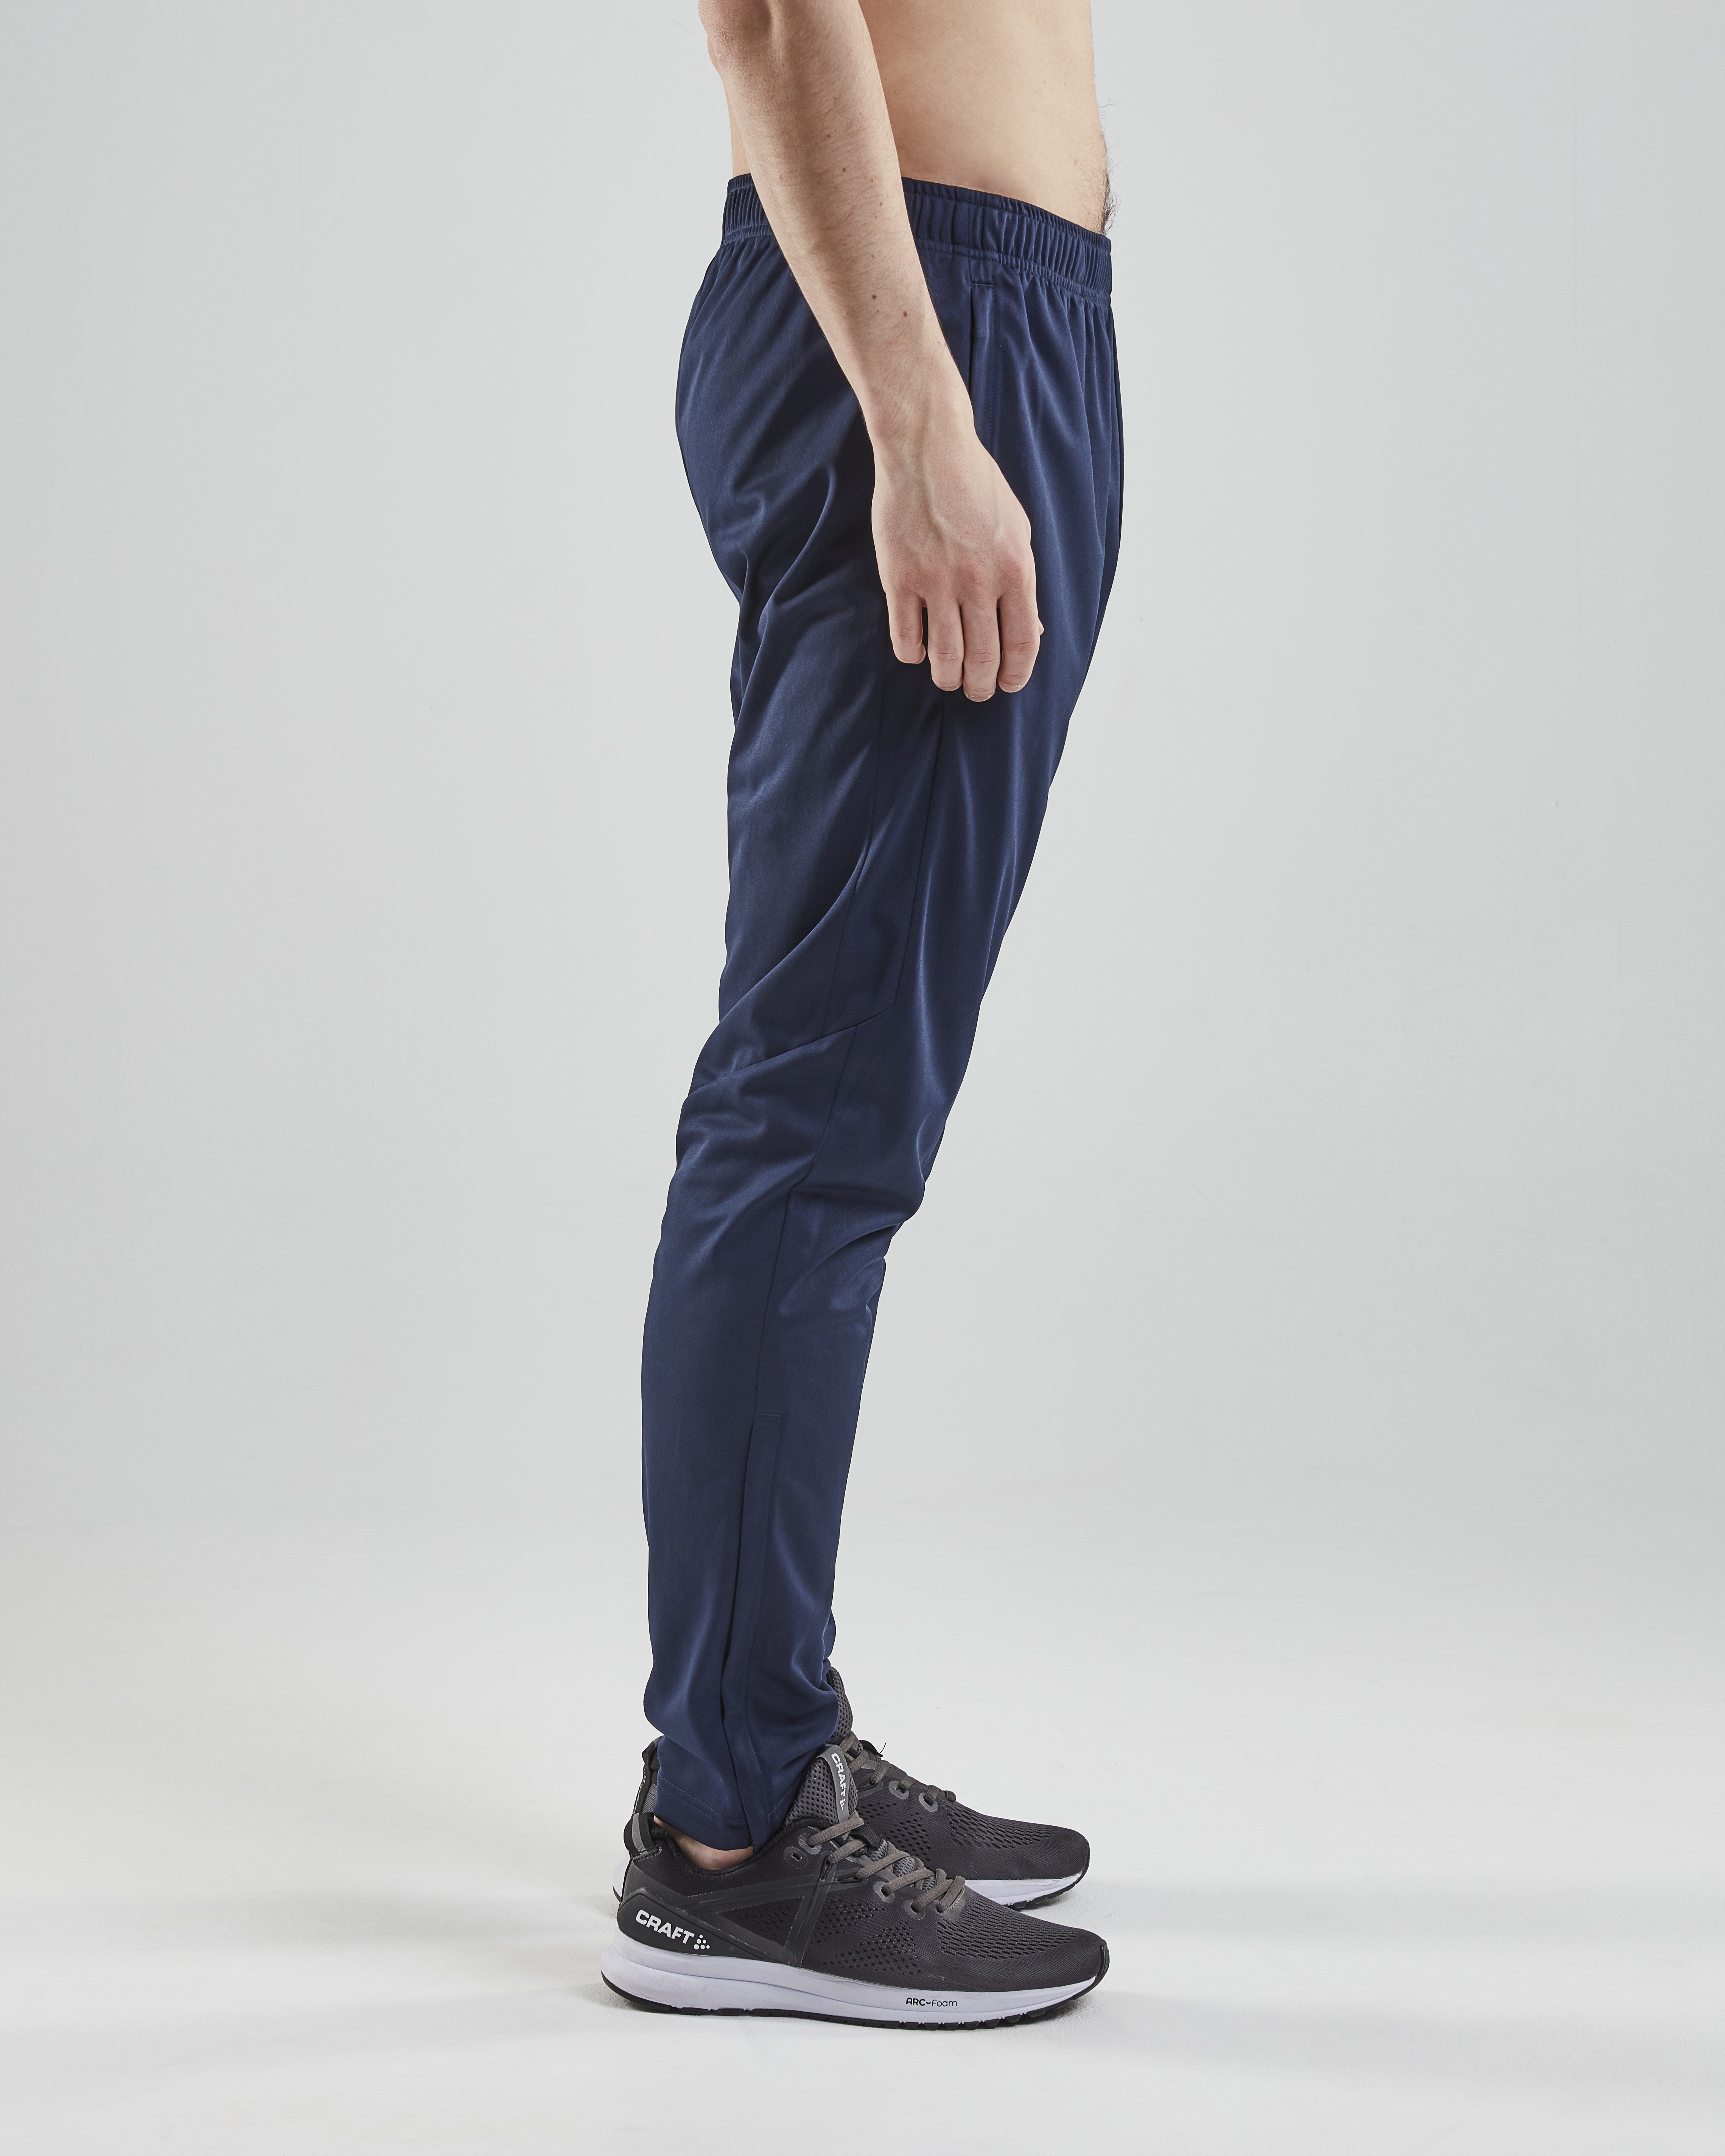 American-elm Printed Navy Blue Dri Fit Slim Fit Running Track Pant